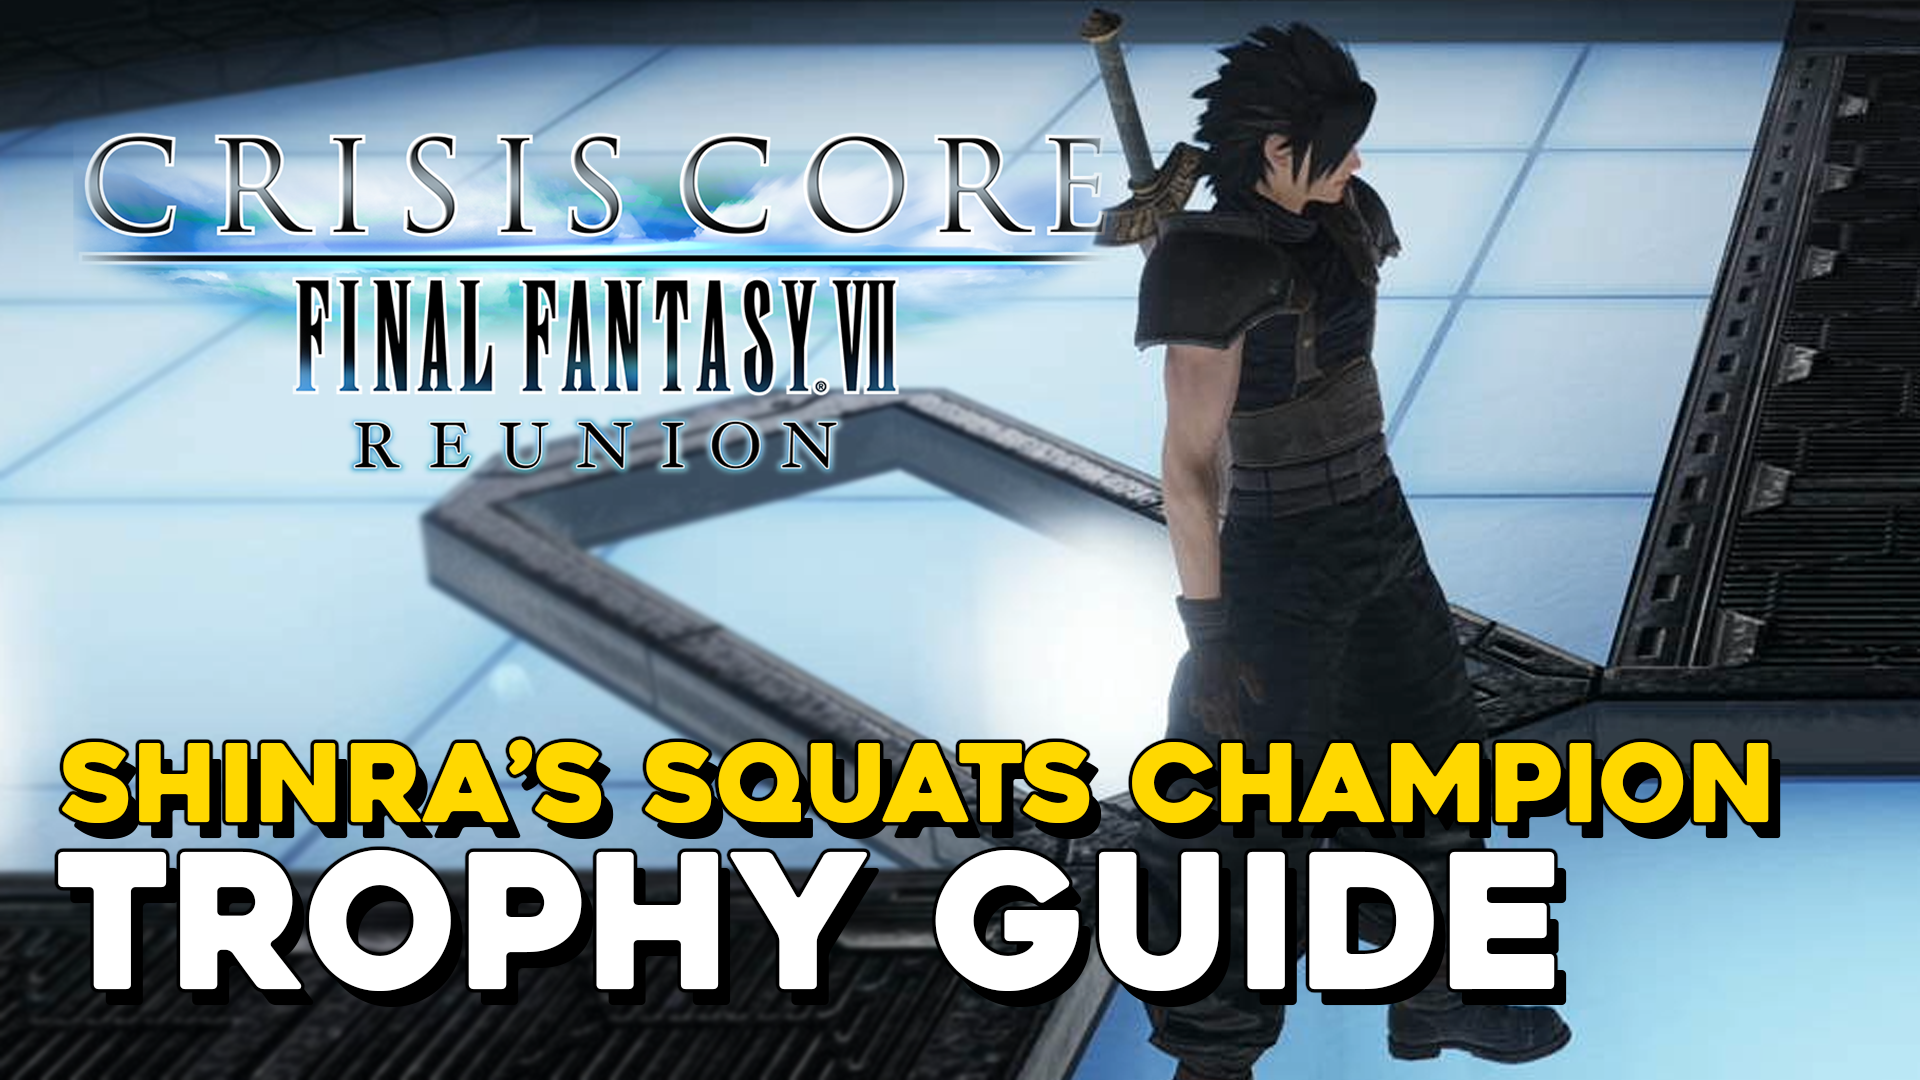 Crisis Core Final Fantasy 7 Reunion Shinra’s Squats Champion Trophy Guide.png